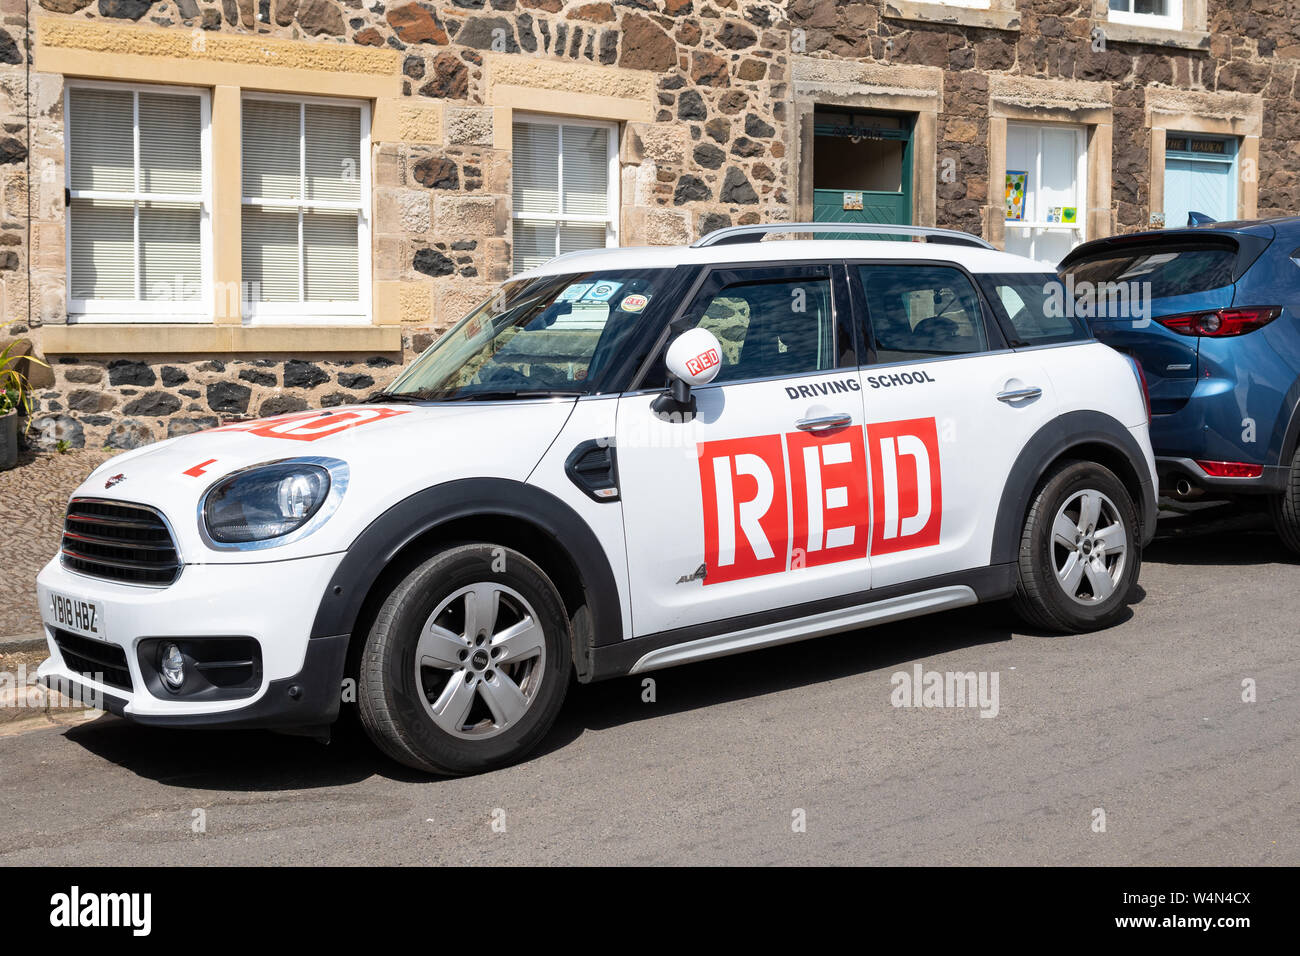 RED driving school car, Scotland, UK Stock Photo